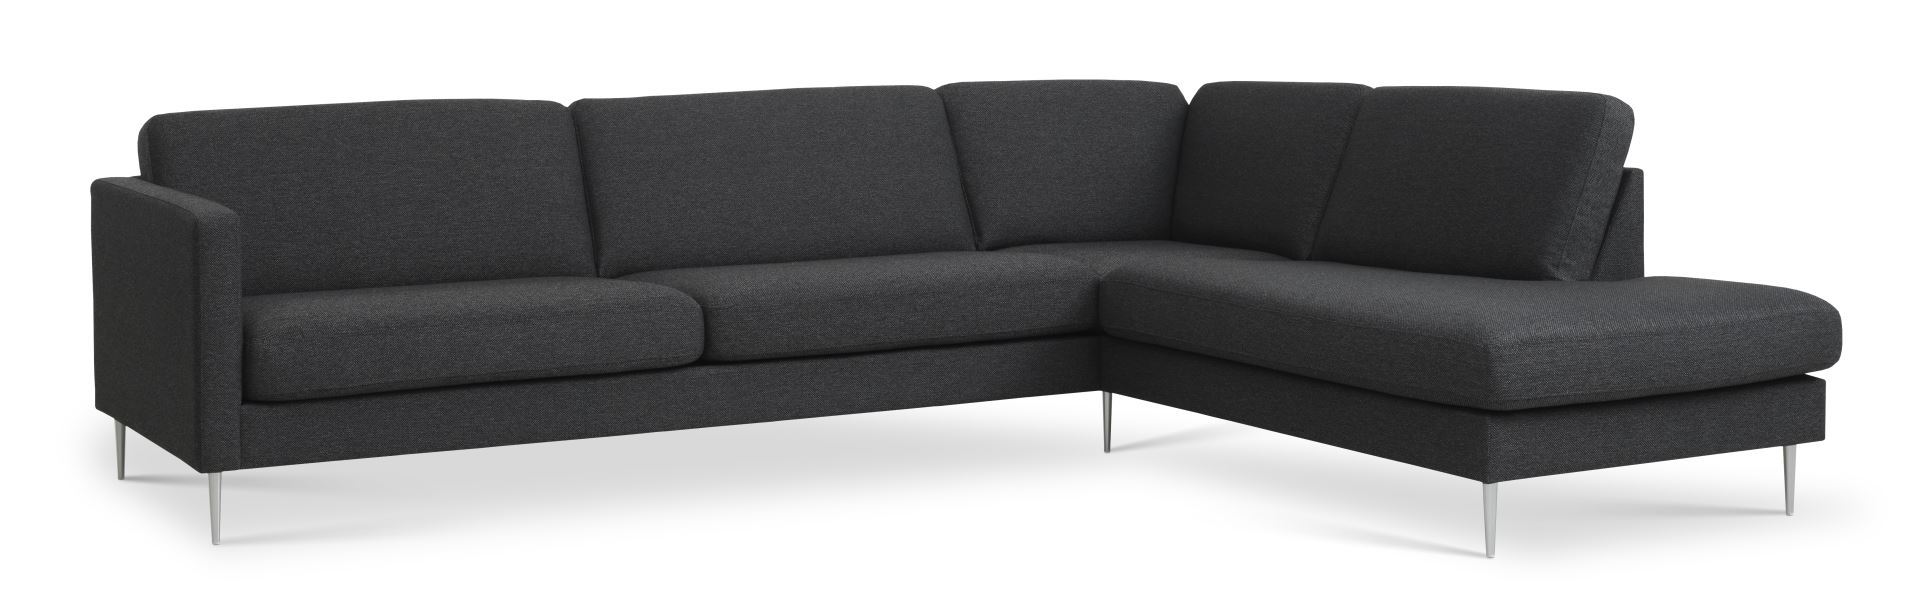 Ask sæt 61 stor OE sofa, m. højre chaiselong - antracitgrå polyester stof og børstet aluminium